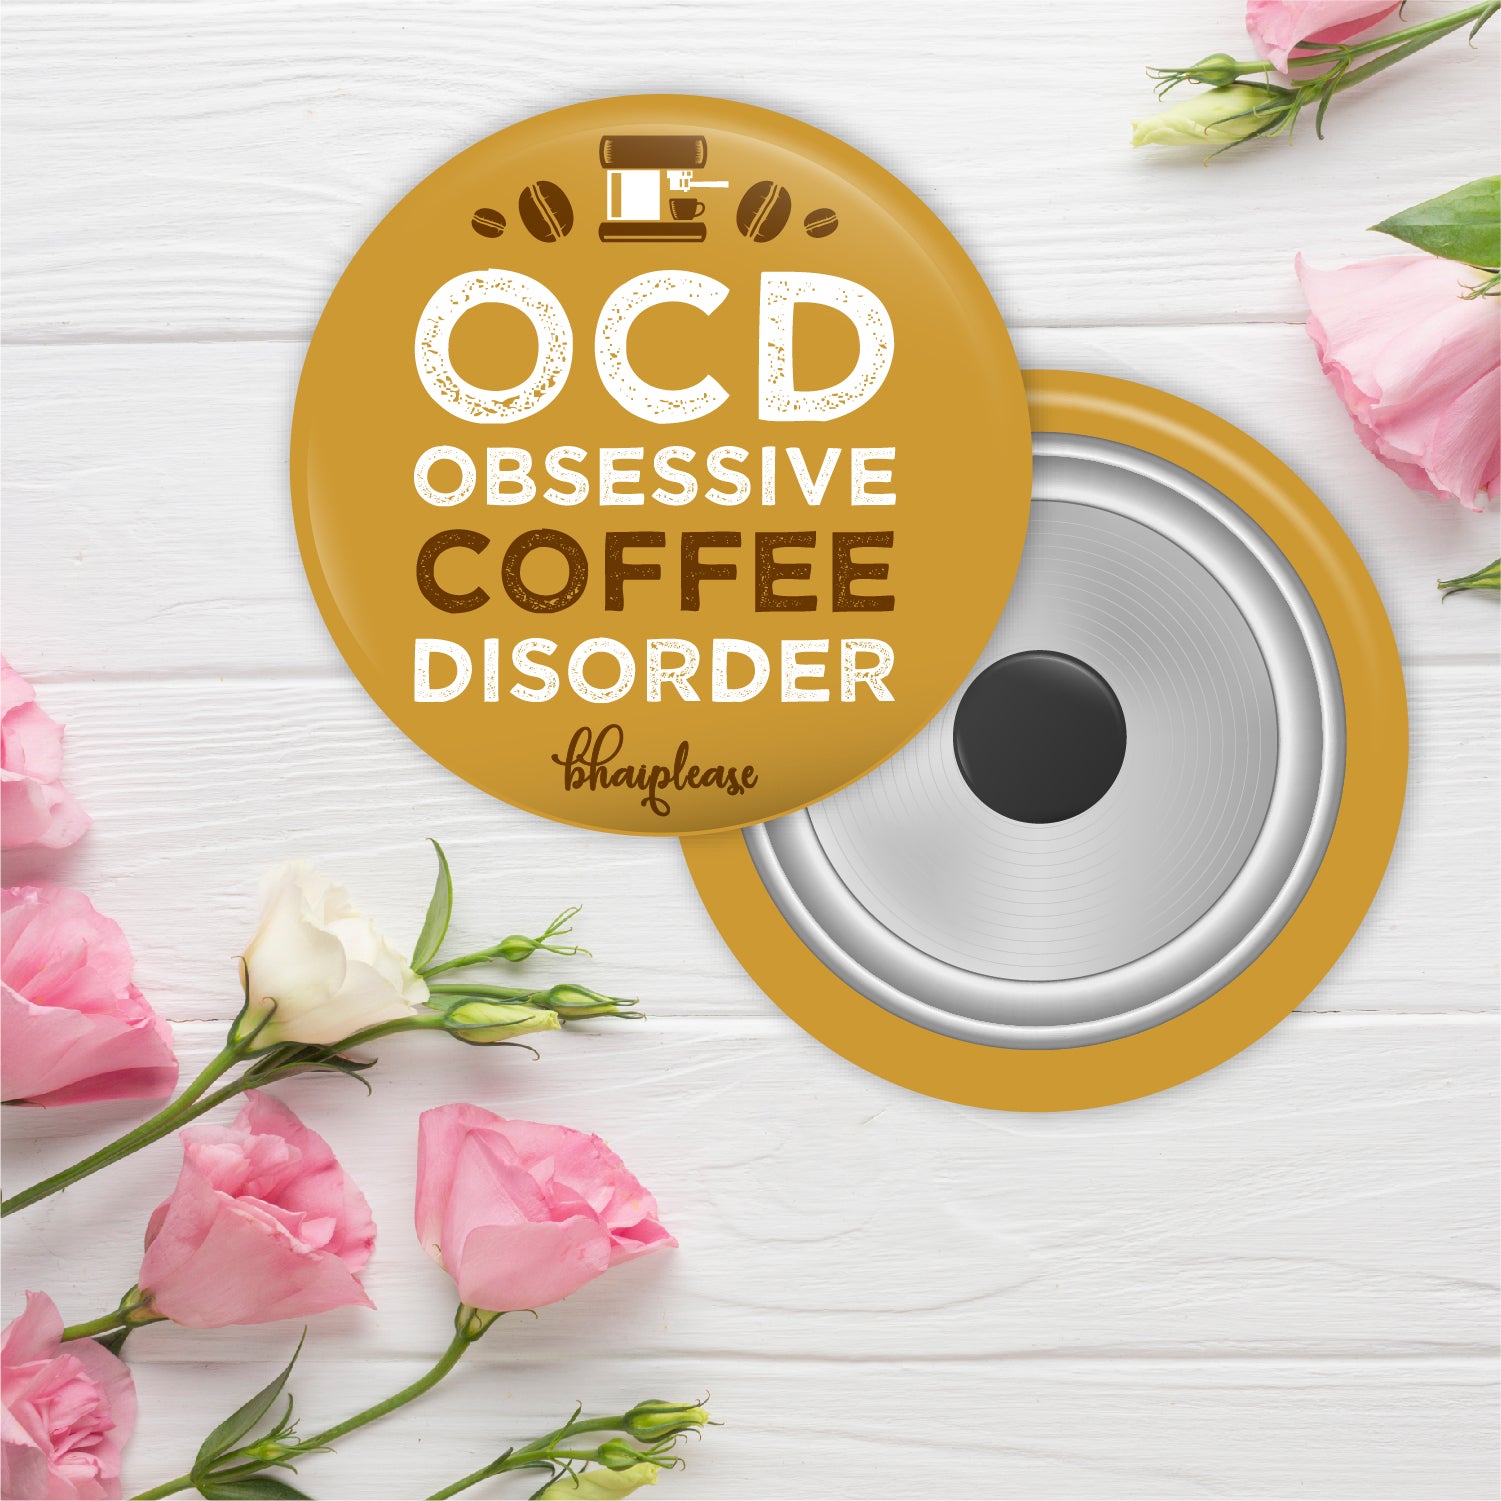 OCD Obsessive Coffee Disorder Round Fridge Magnet